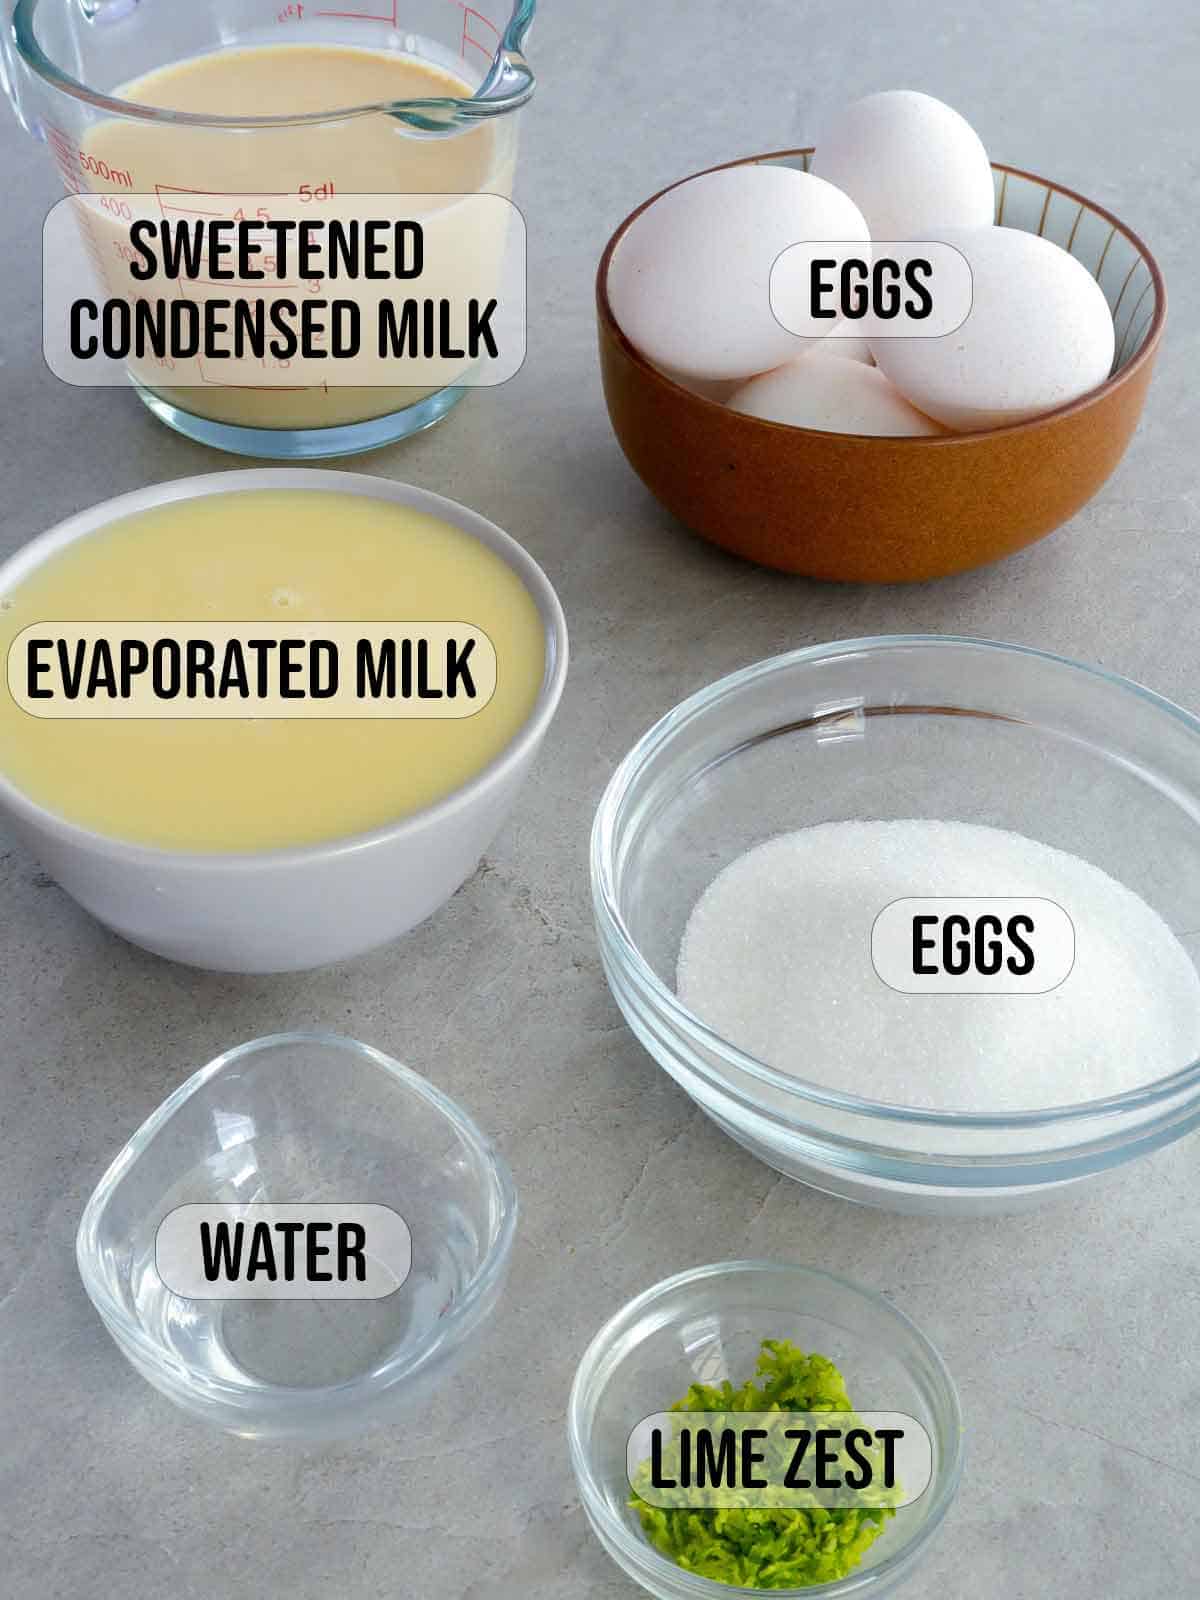 eggs, condensed milk, evaporated milk, sugar, water, lime zest in bowls.